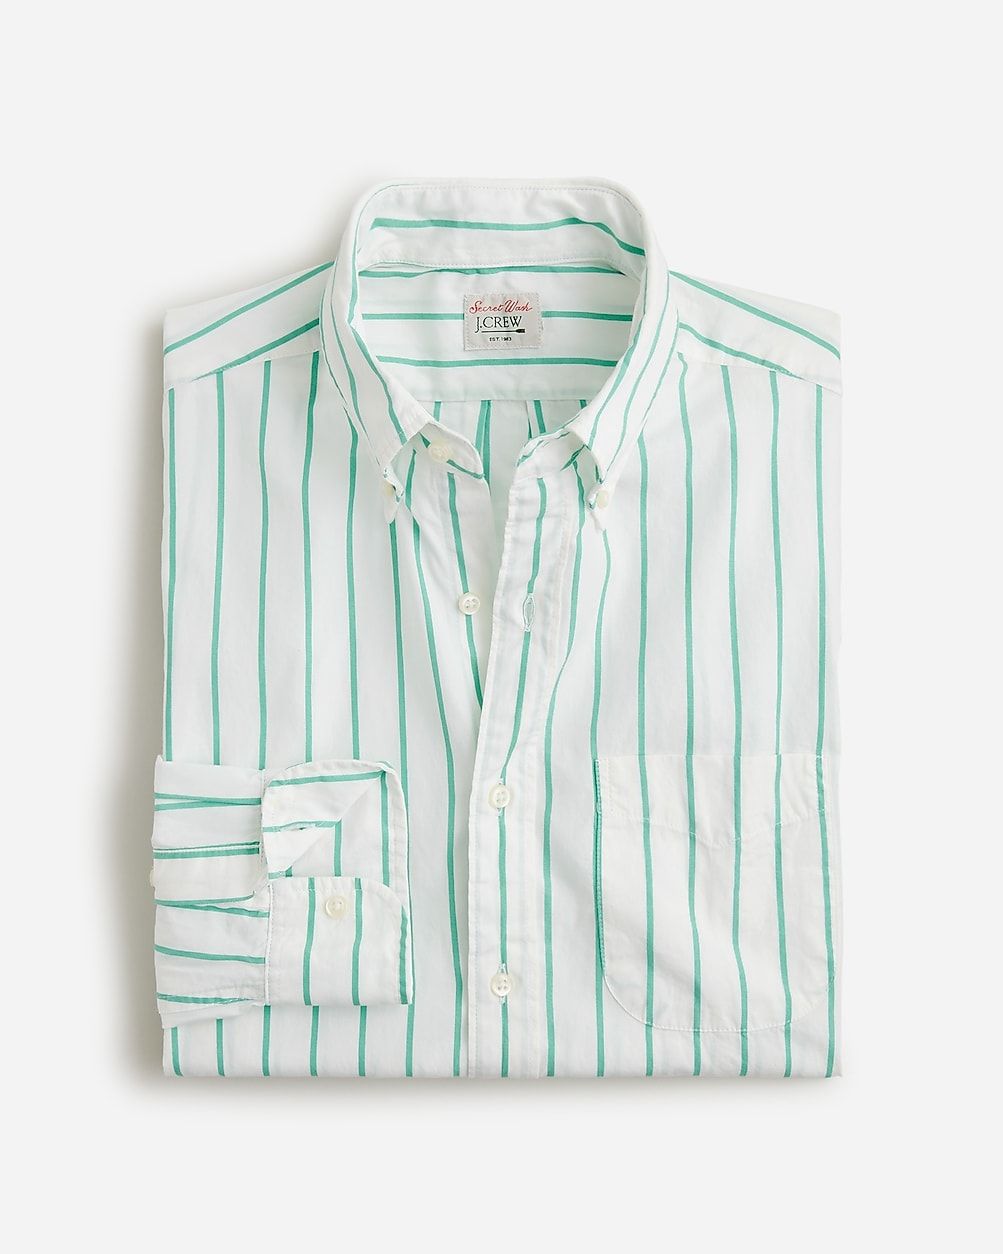 Secret Wash cotton poplin shirt in stripe | J.Crew US